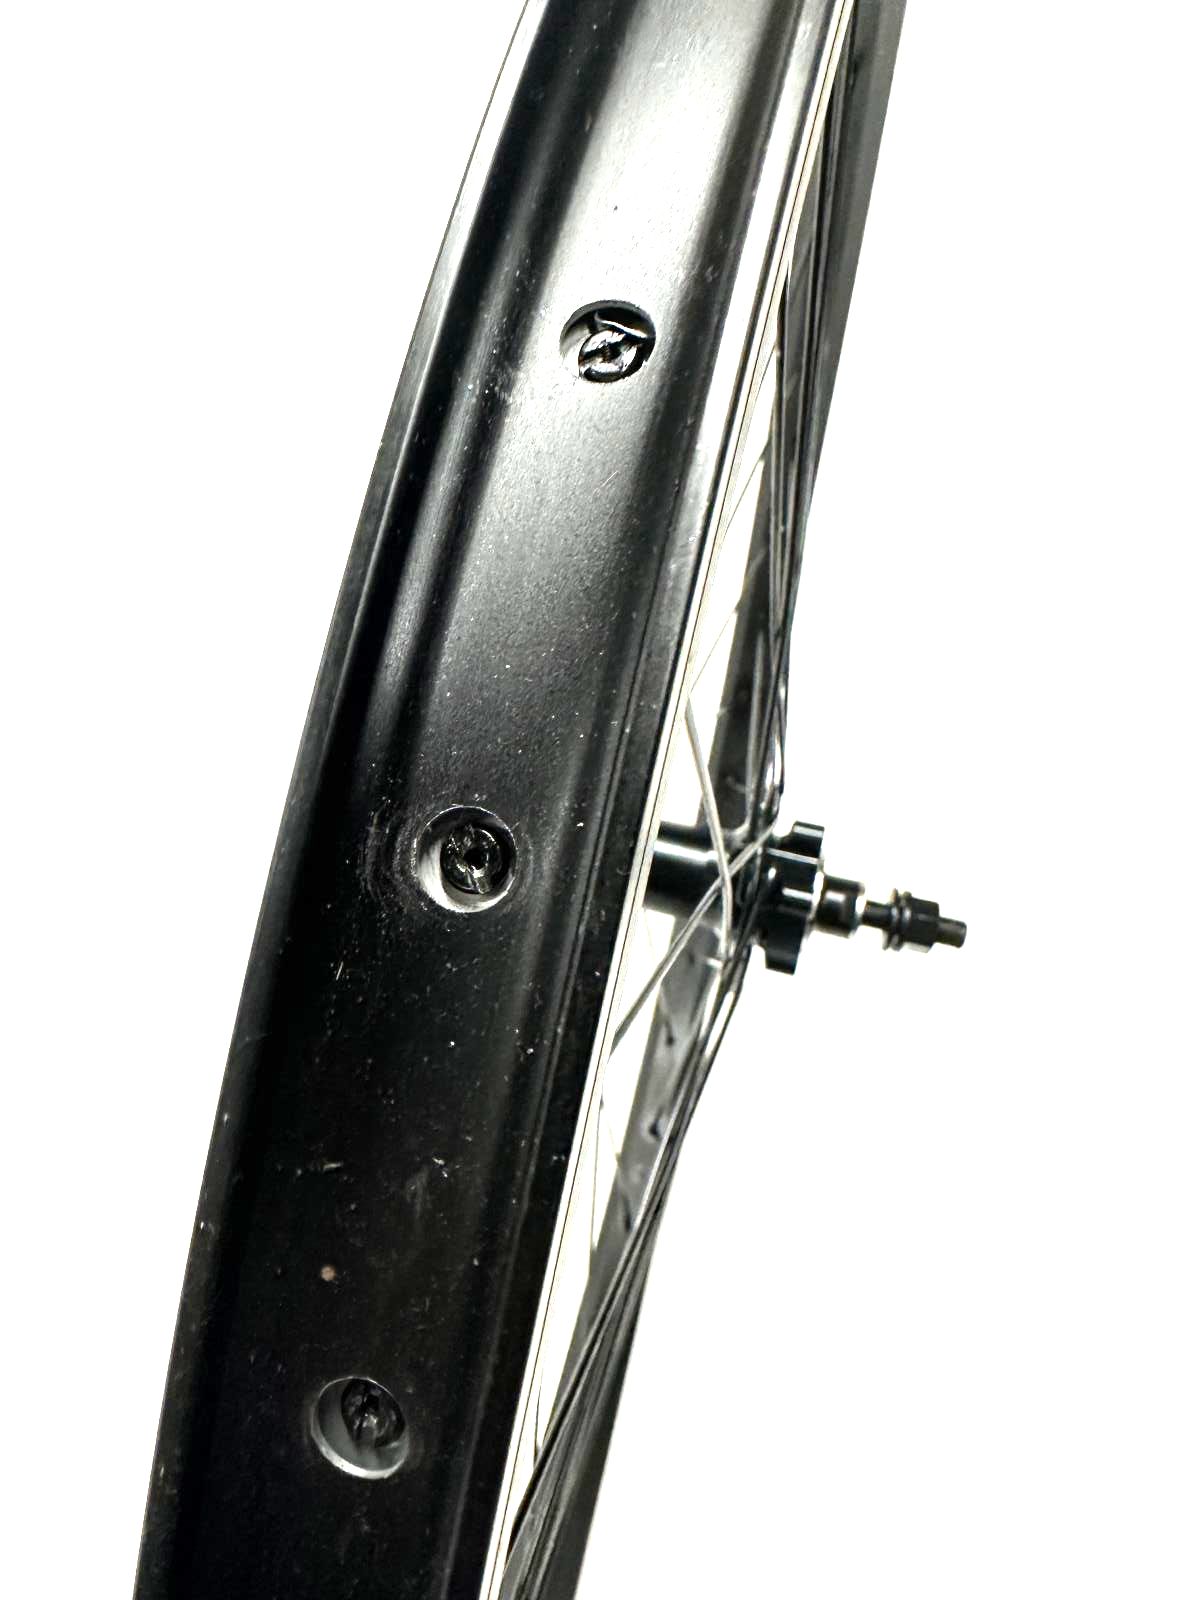 FRAMED 26" Rear + Front Alloy Black BMX Wheelset 6 Bolt Disc 110mm / 100mm New - Random Bike Parts